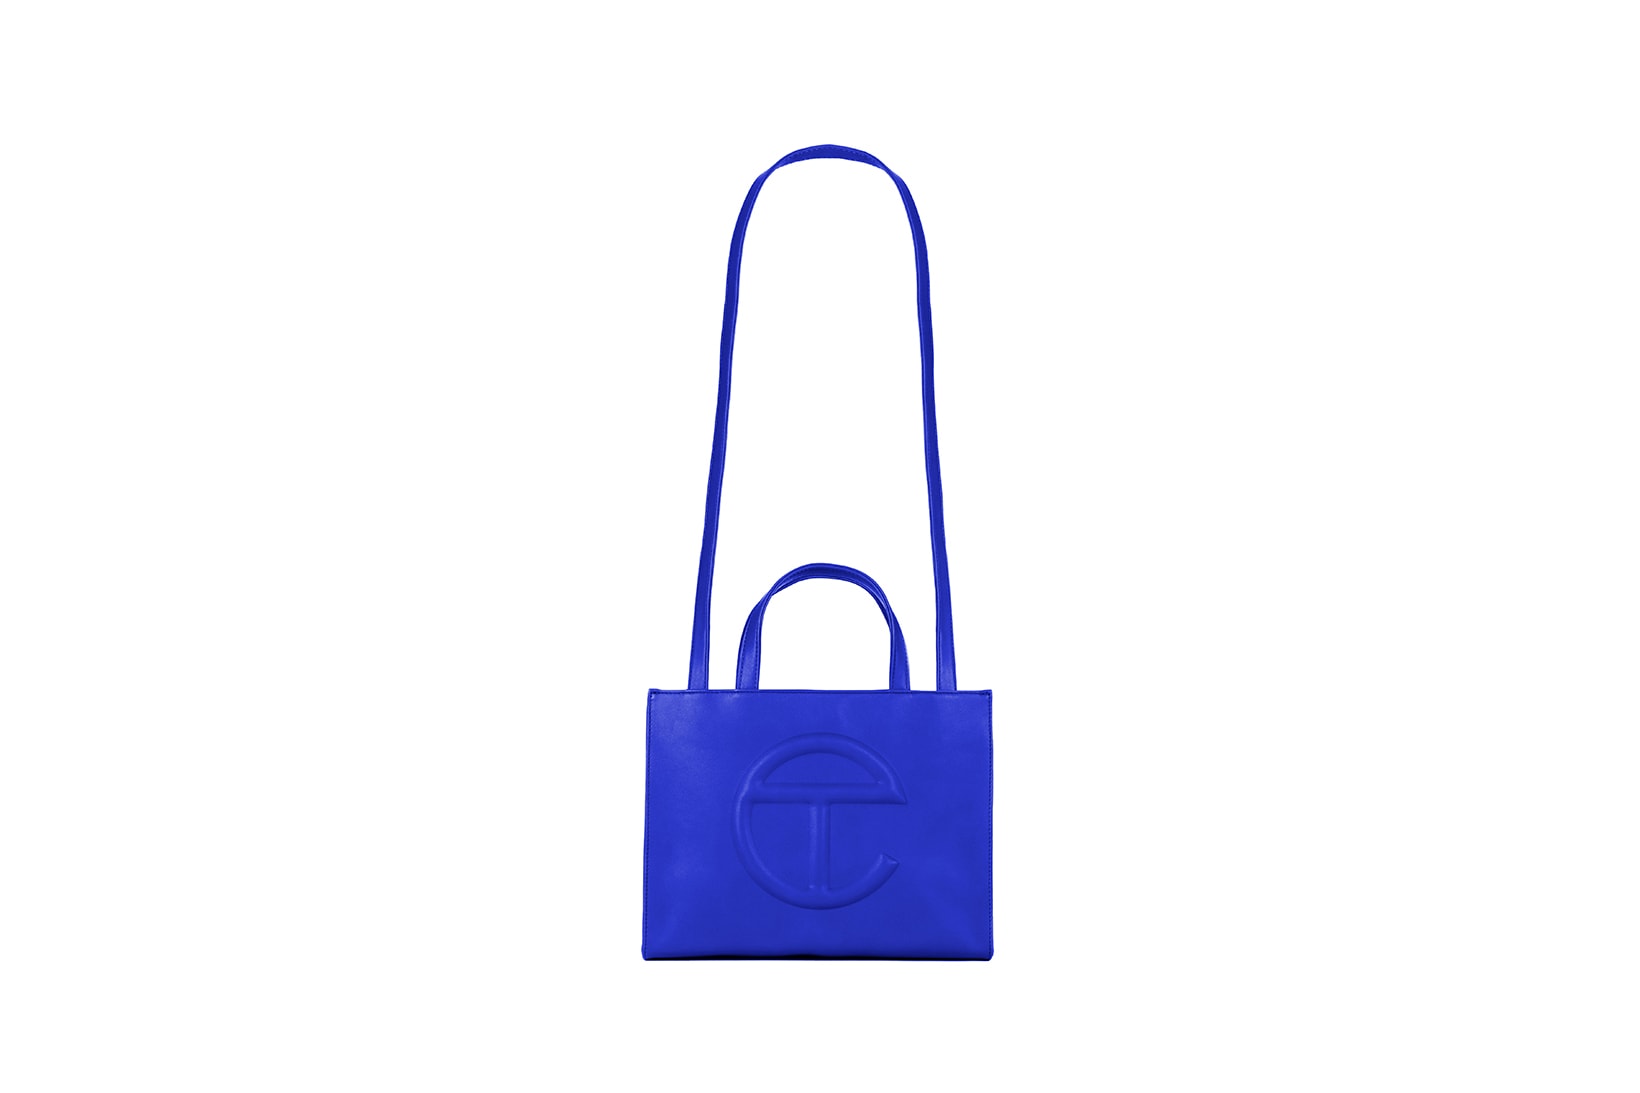 Telfar Shopping Bag Painter's Tape Royal Blue New Colorway Medium